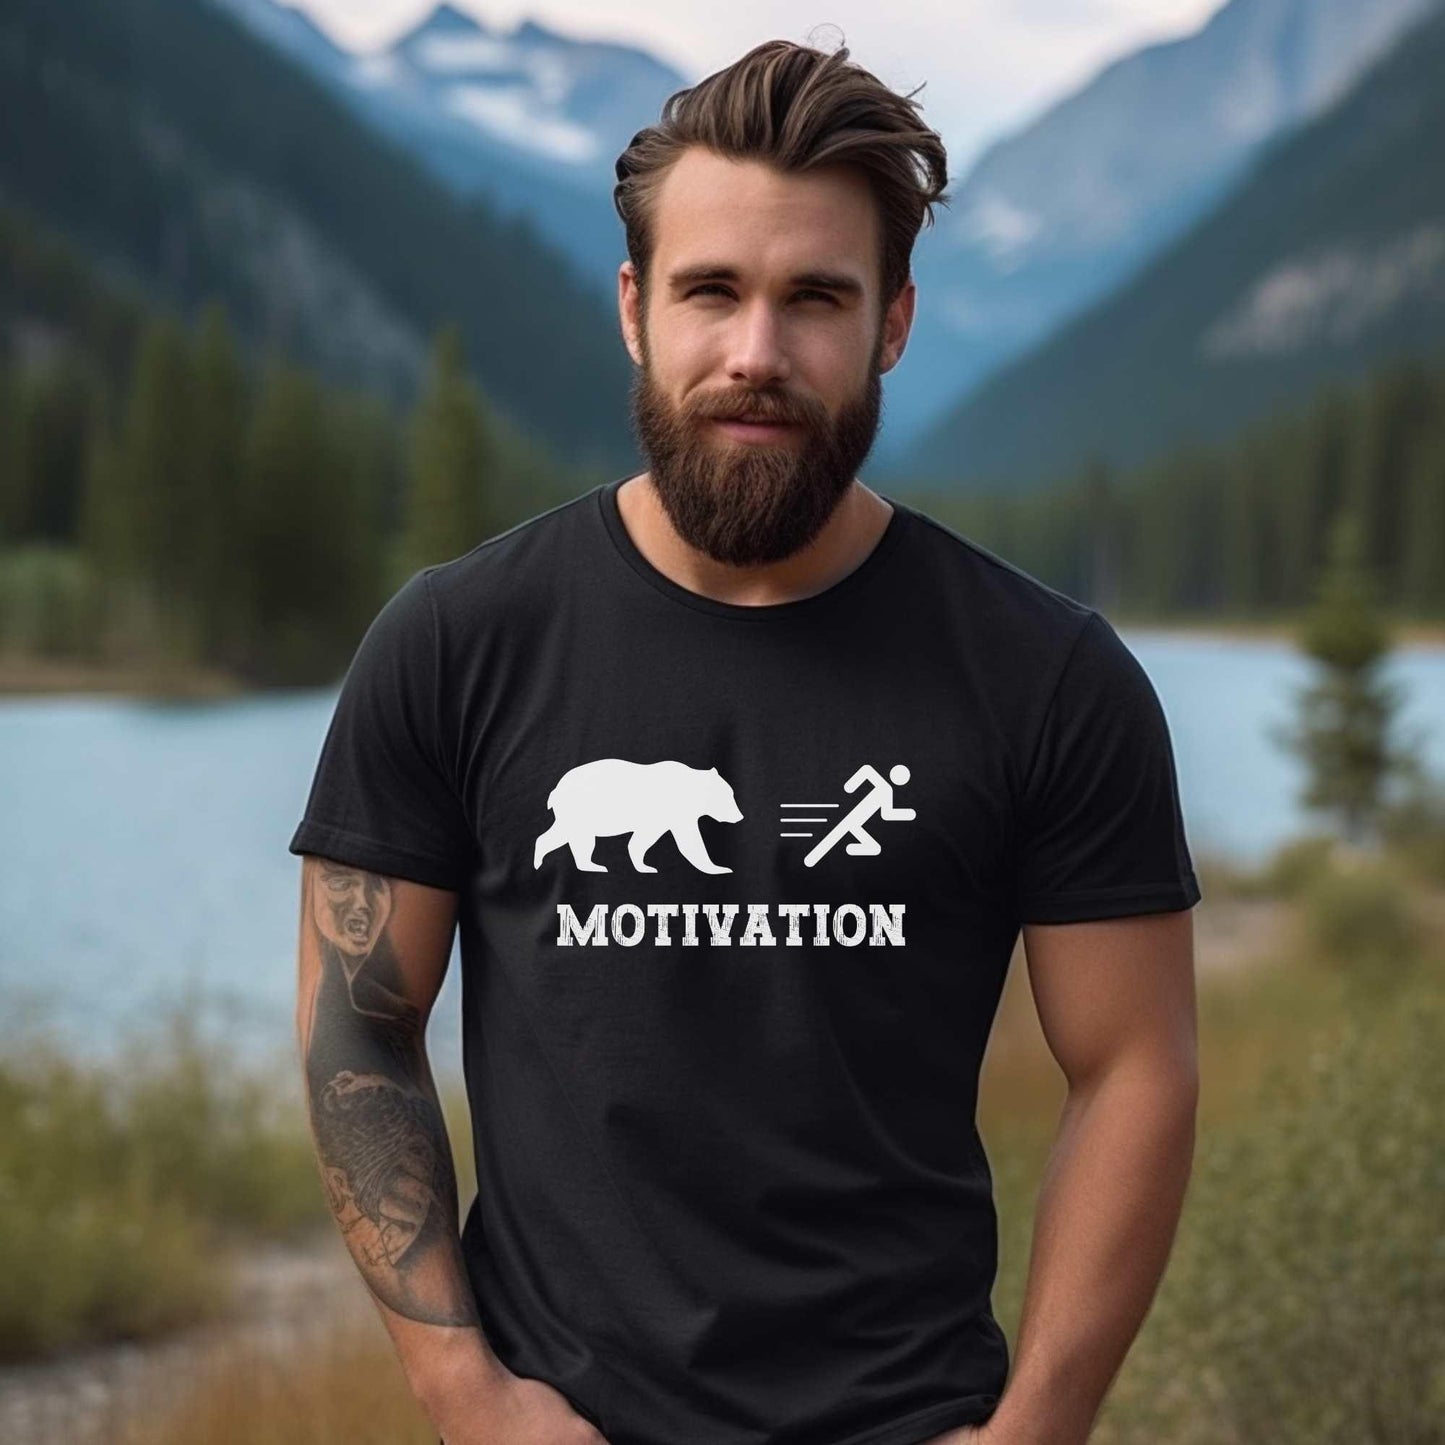 Motivation T-Shirt - Adventure Threads Company